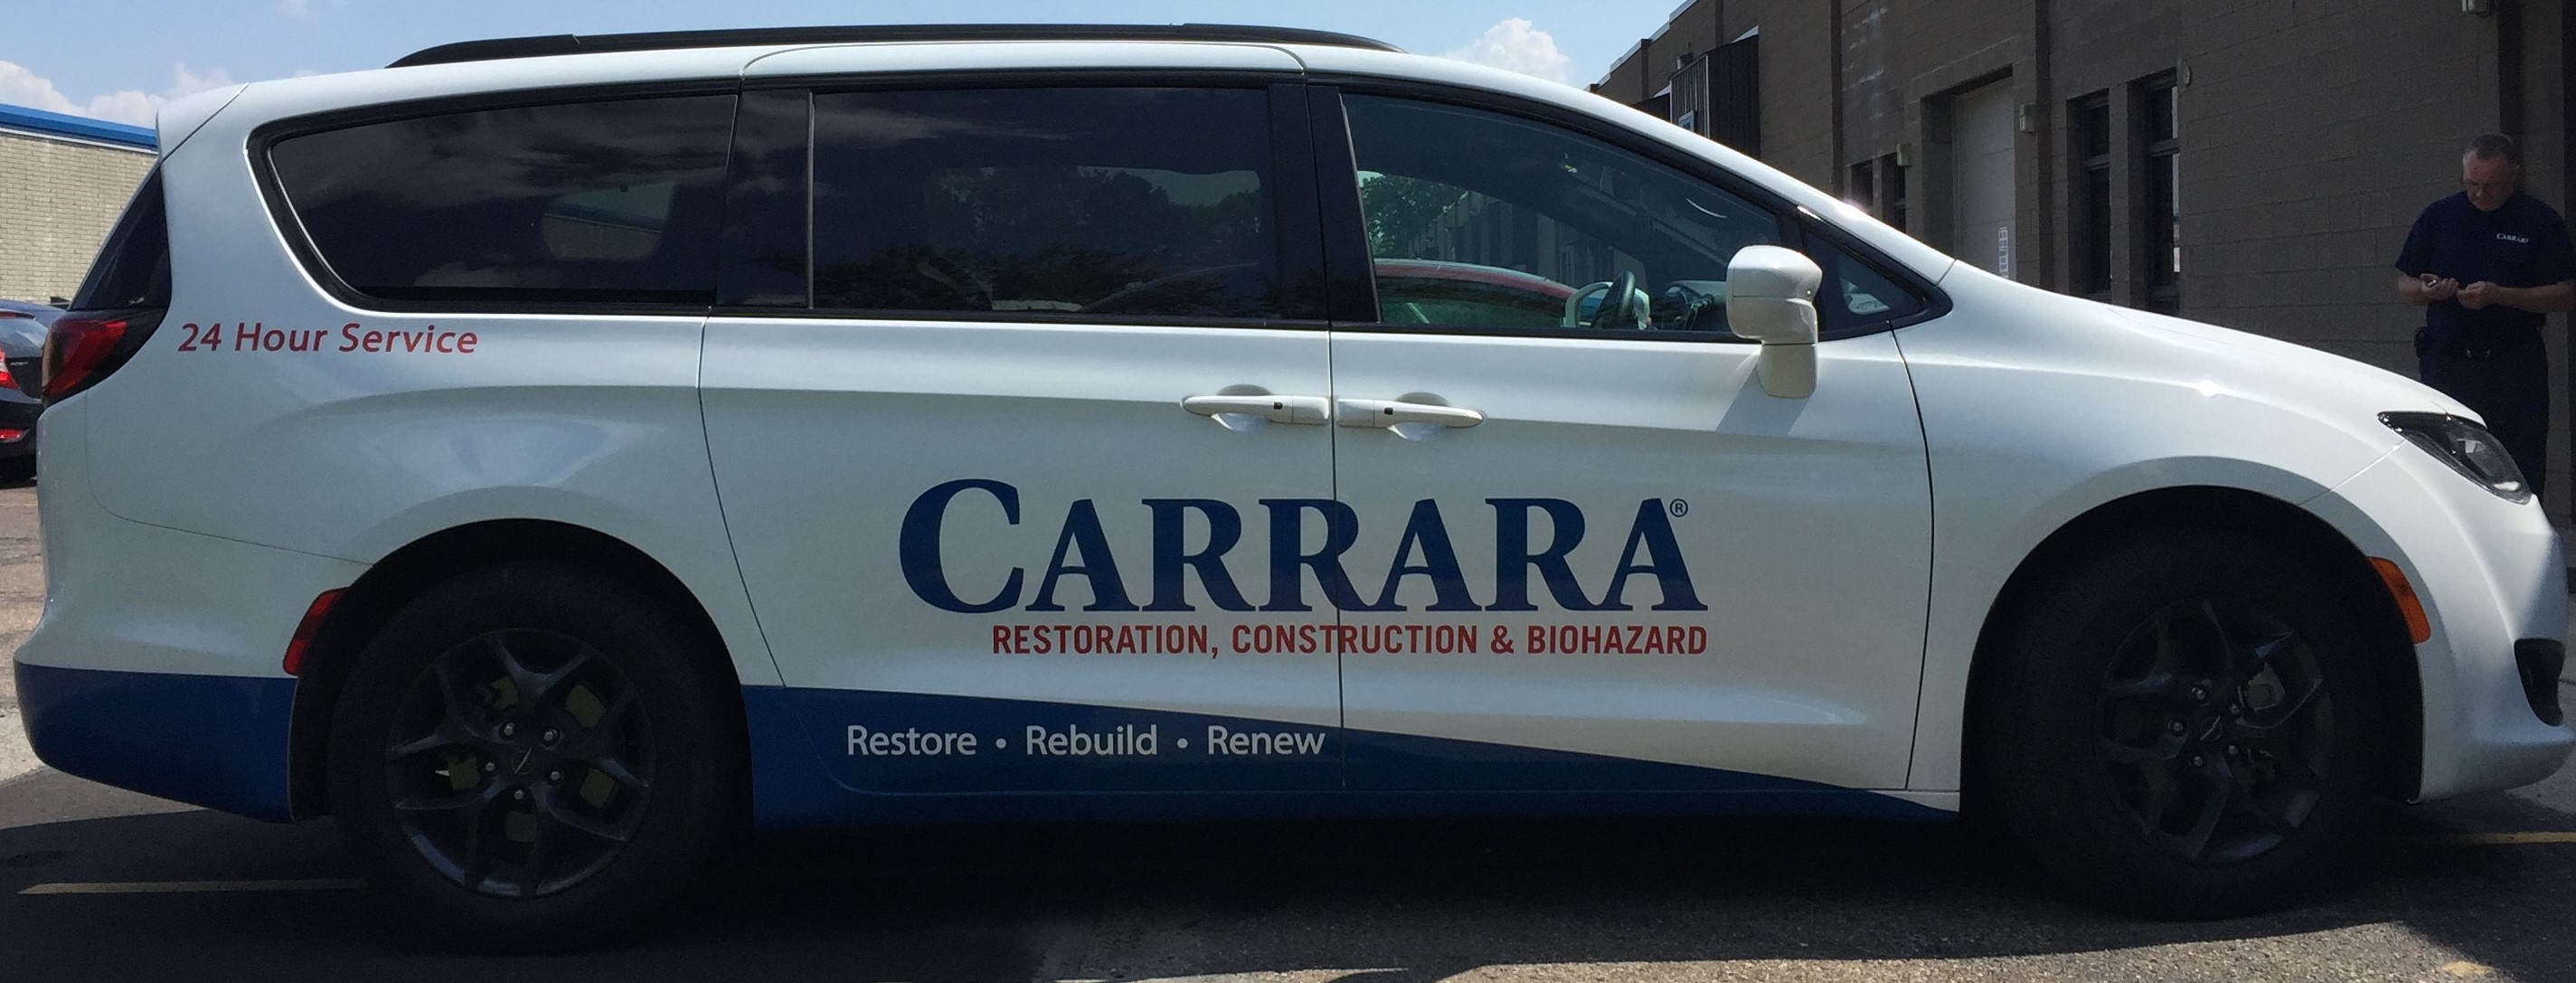 Custom vehicle wrap graphics on van for Carrara